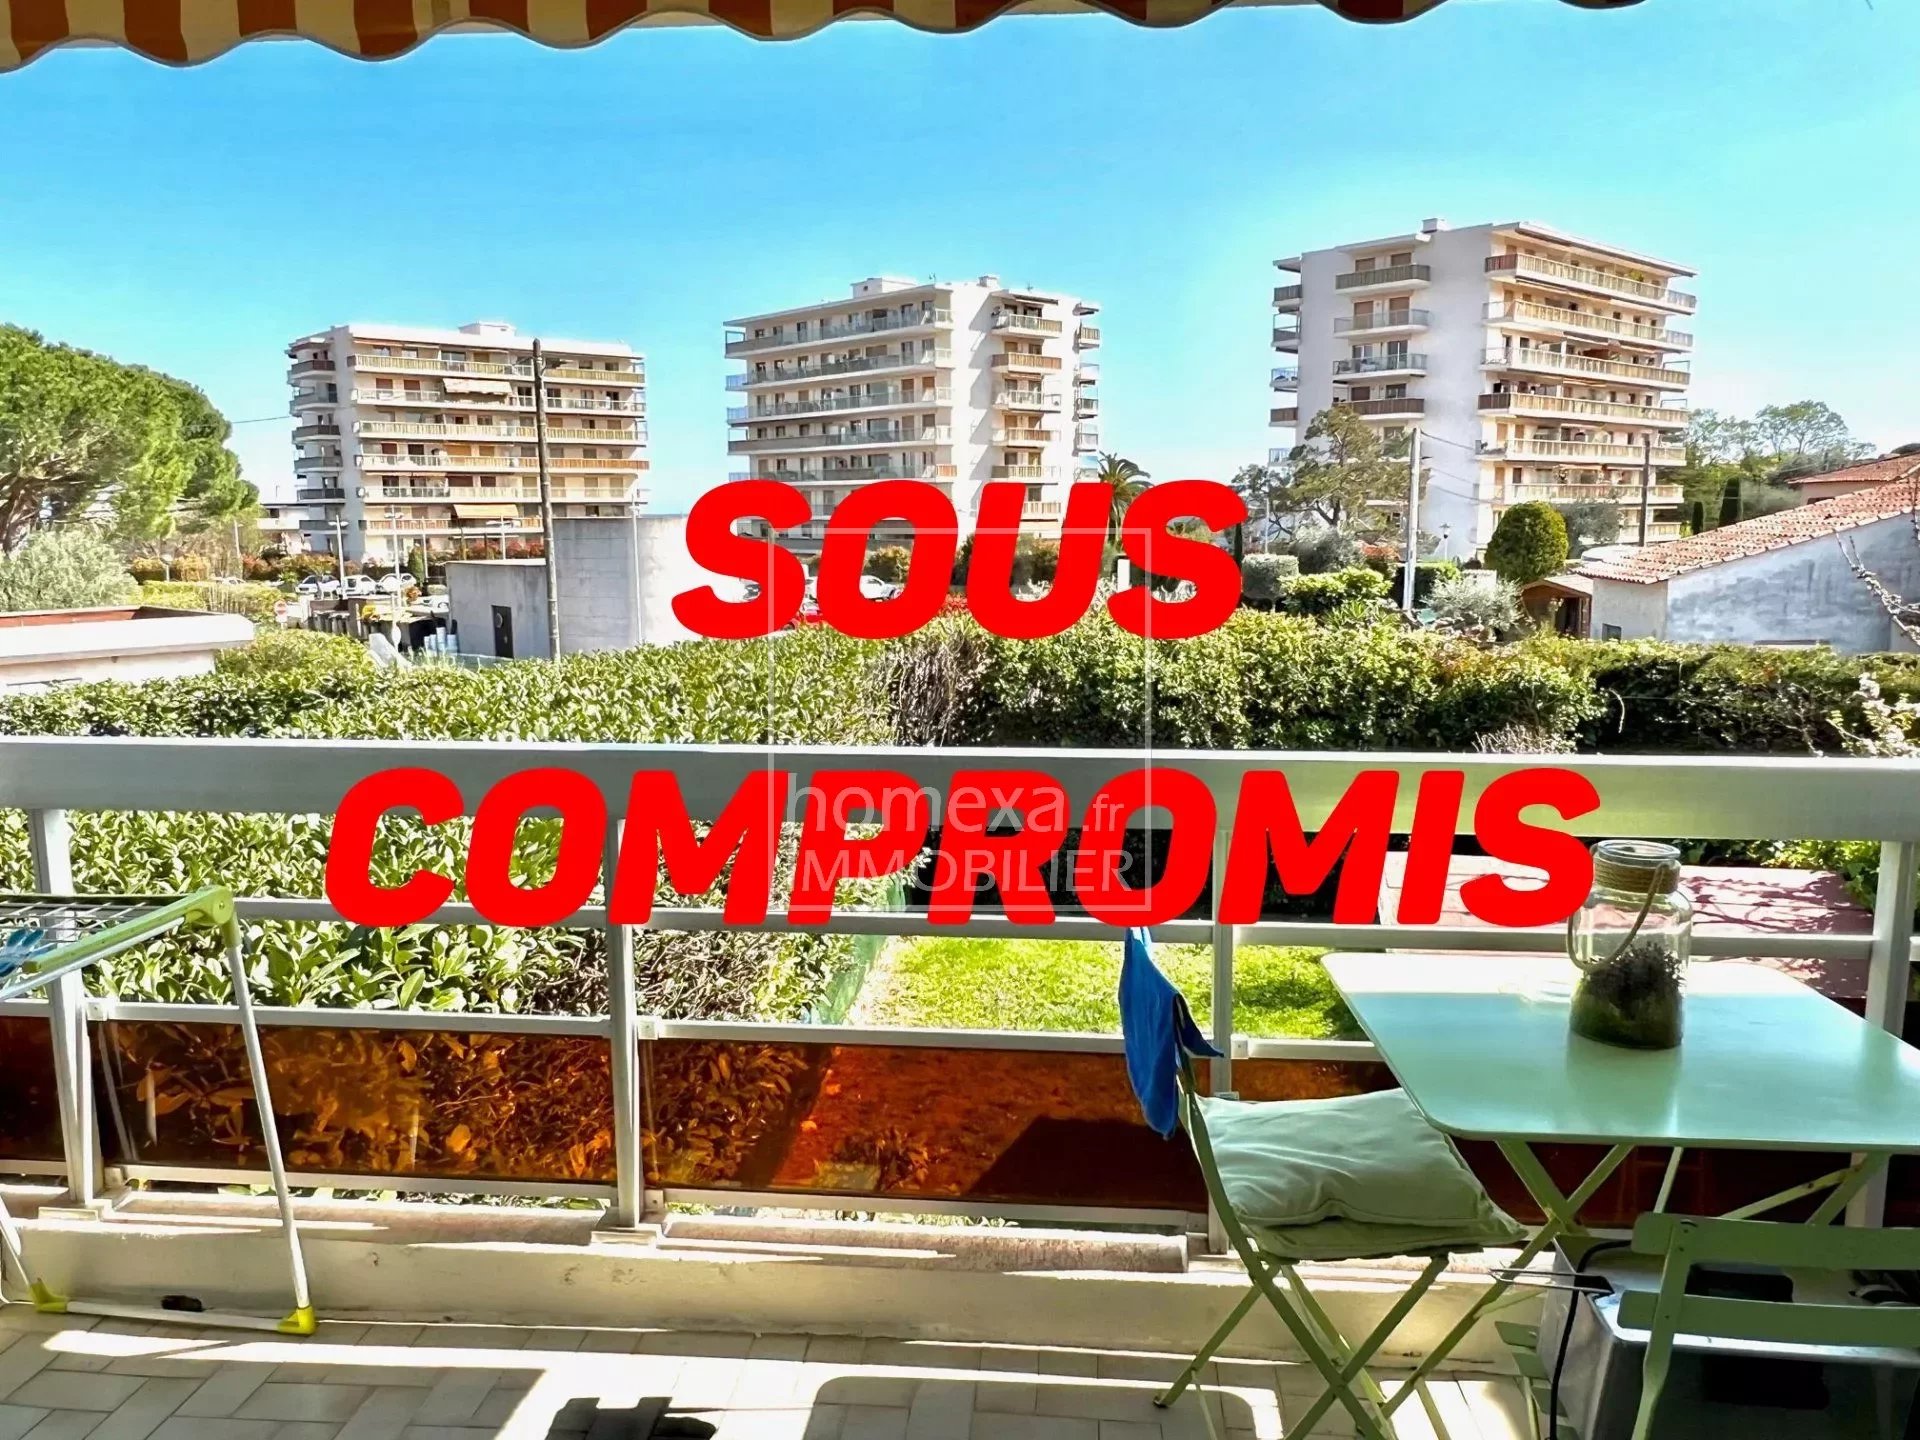 Vente Appartement 33m² 2 Pièces à Antibes (06600) - Homexa